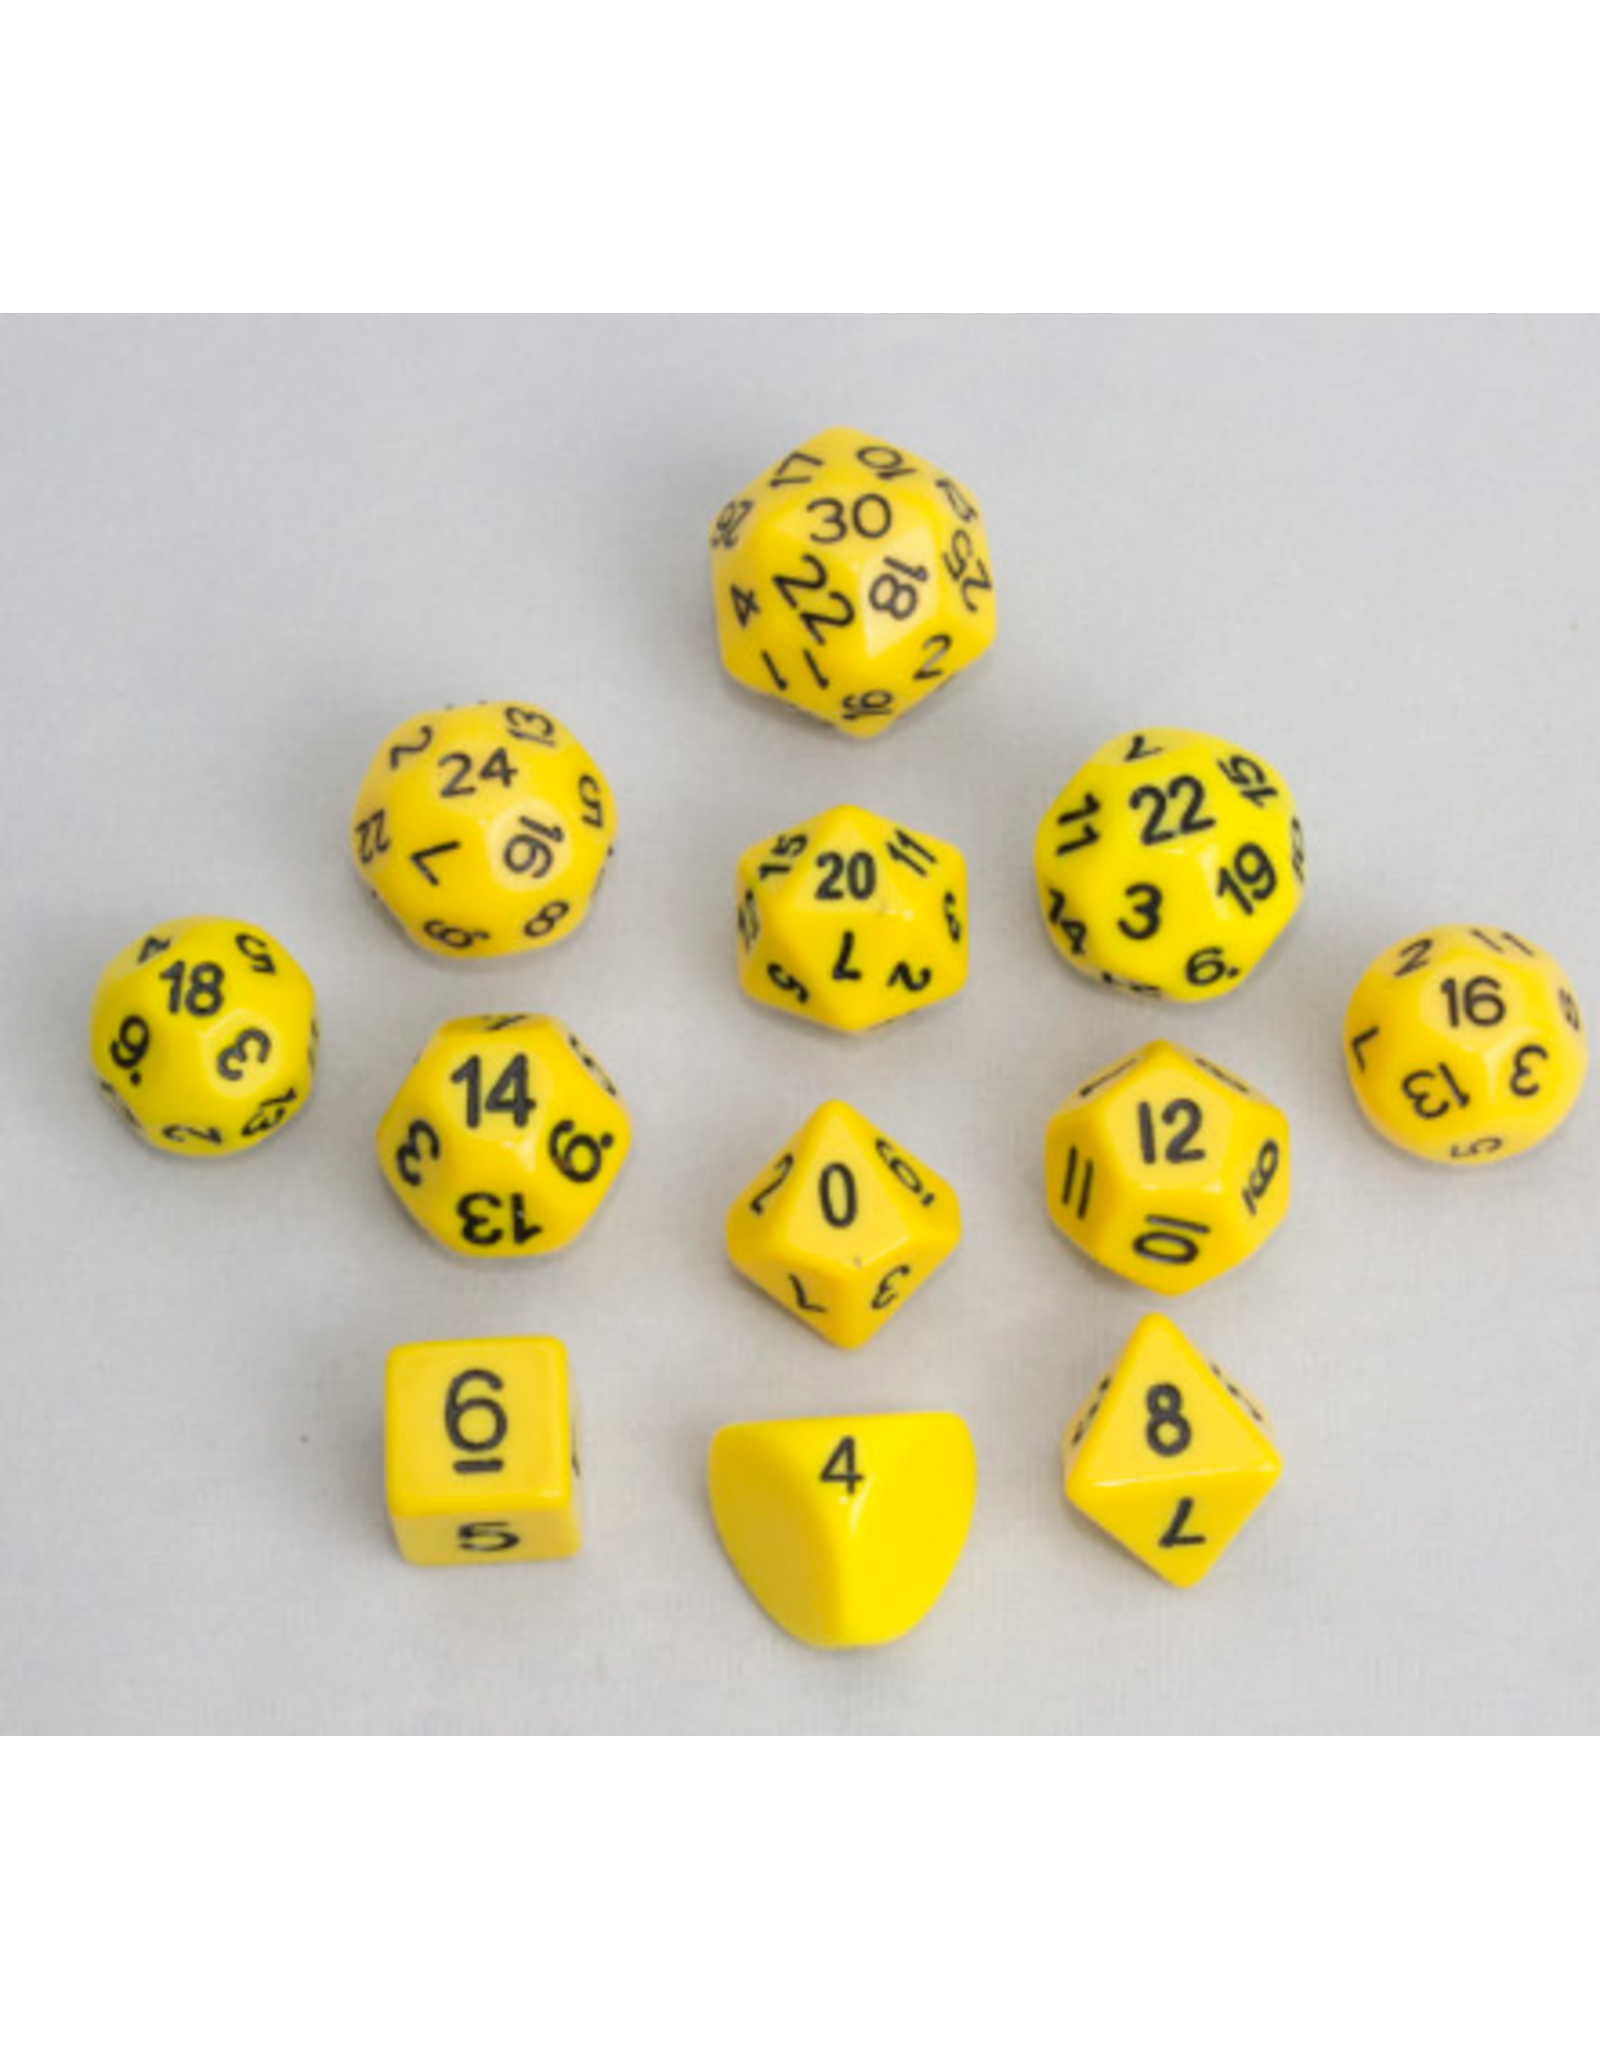 Chessex Dice. Opaque Yellow/black d4 dice